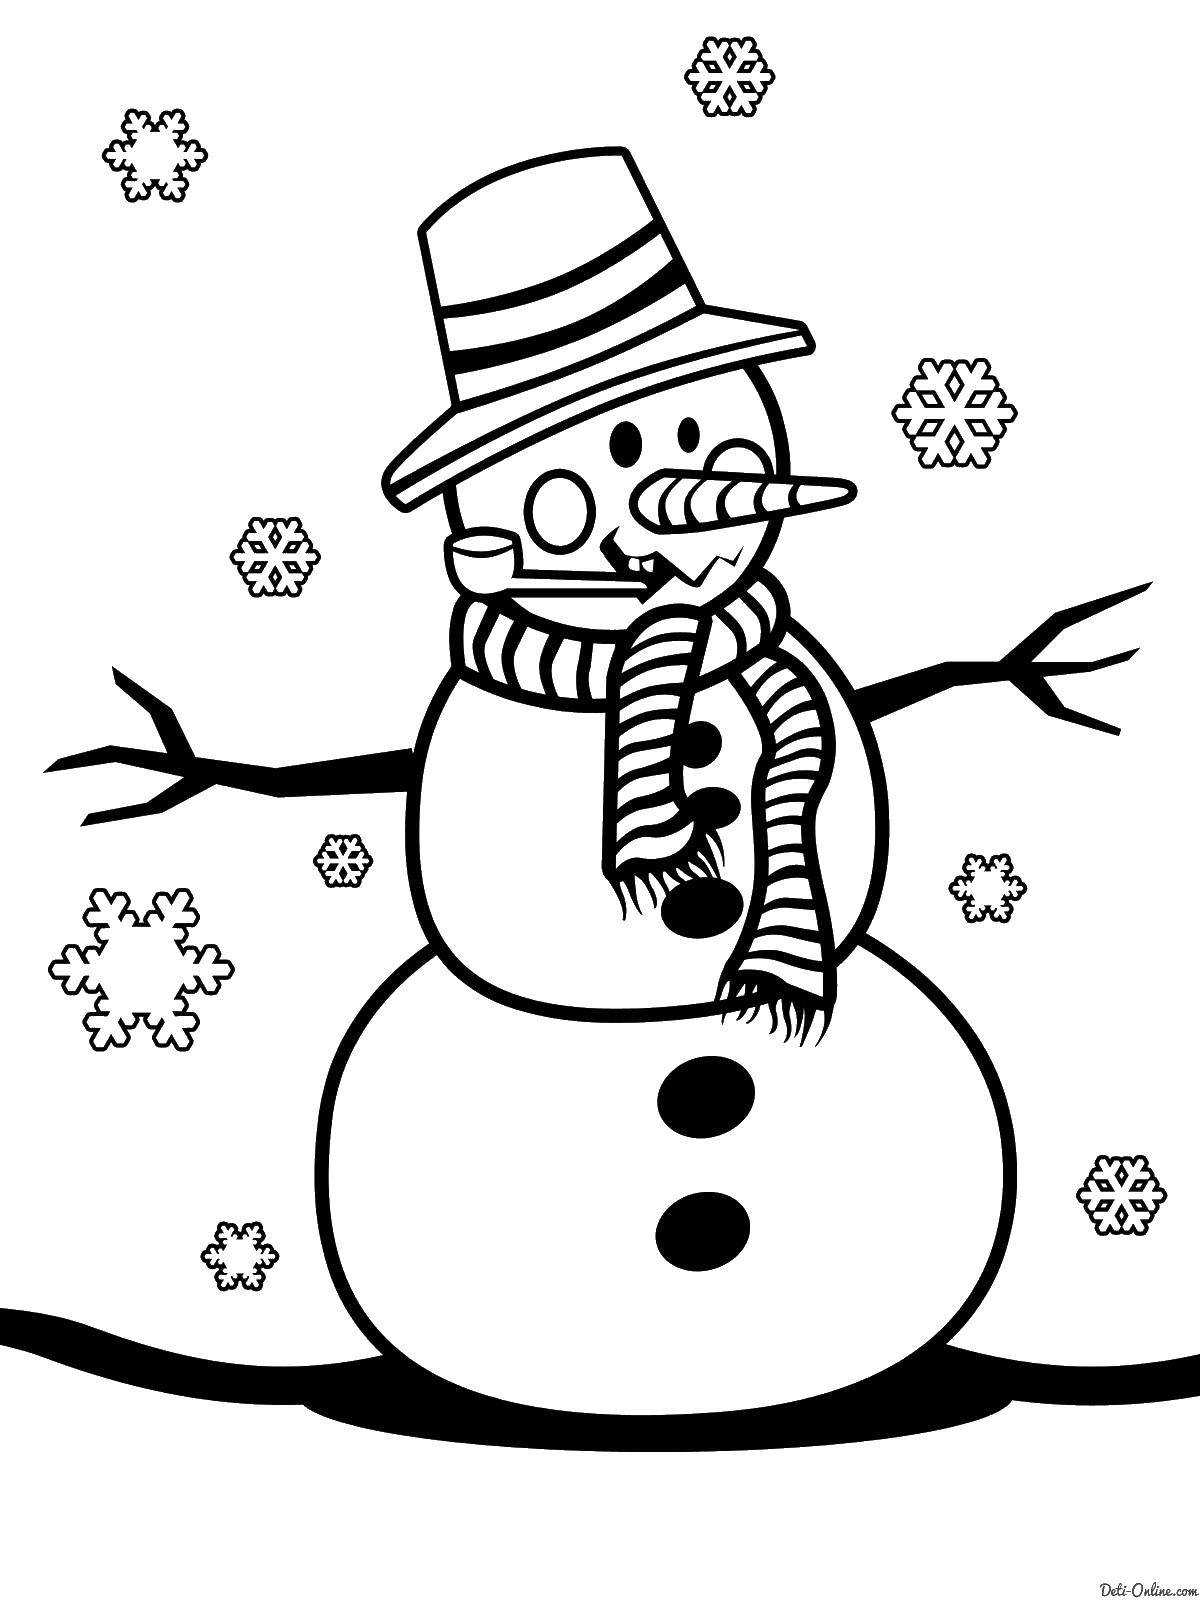 Название: Раскраска Снеговик. Категория: раскраски из фигур. Теги: снеговик, муштук, шарф.